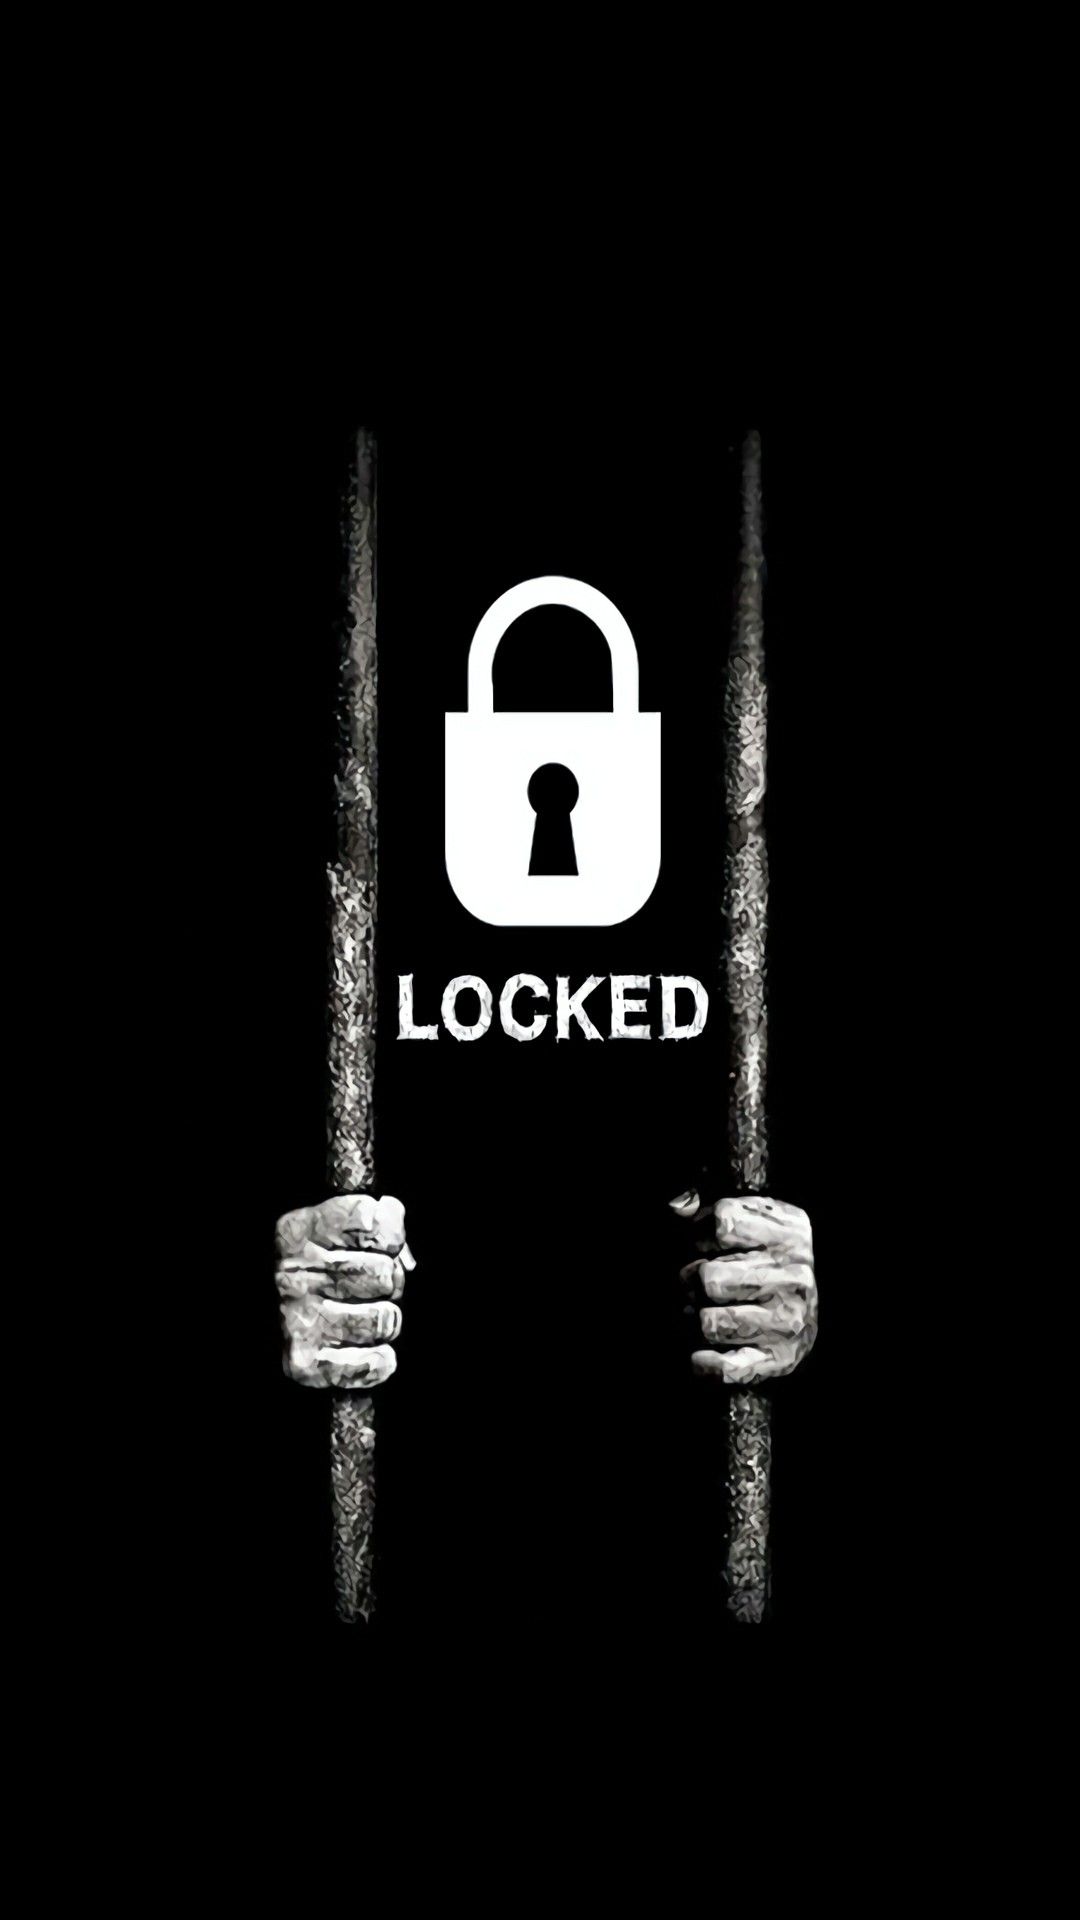 Locked | Wallpapers (for phones) ㊗ | Pinterest